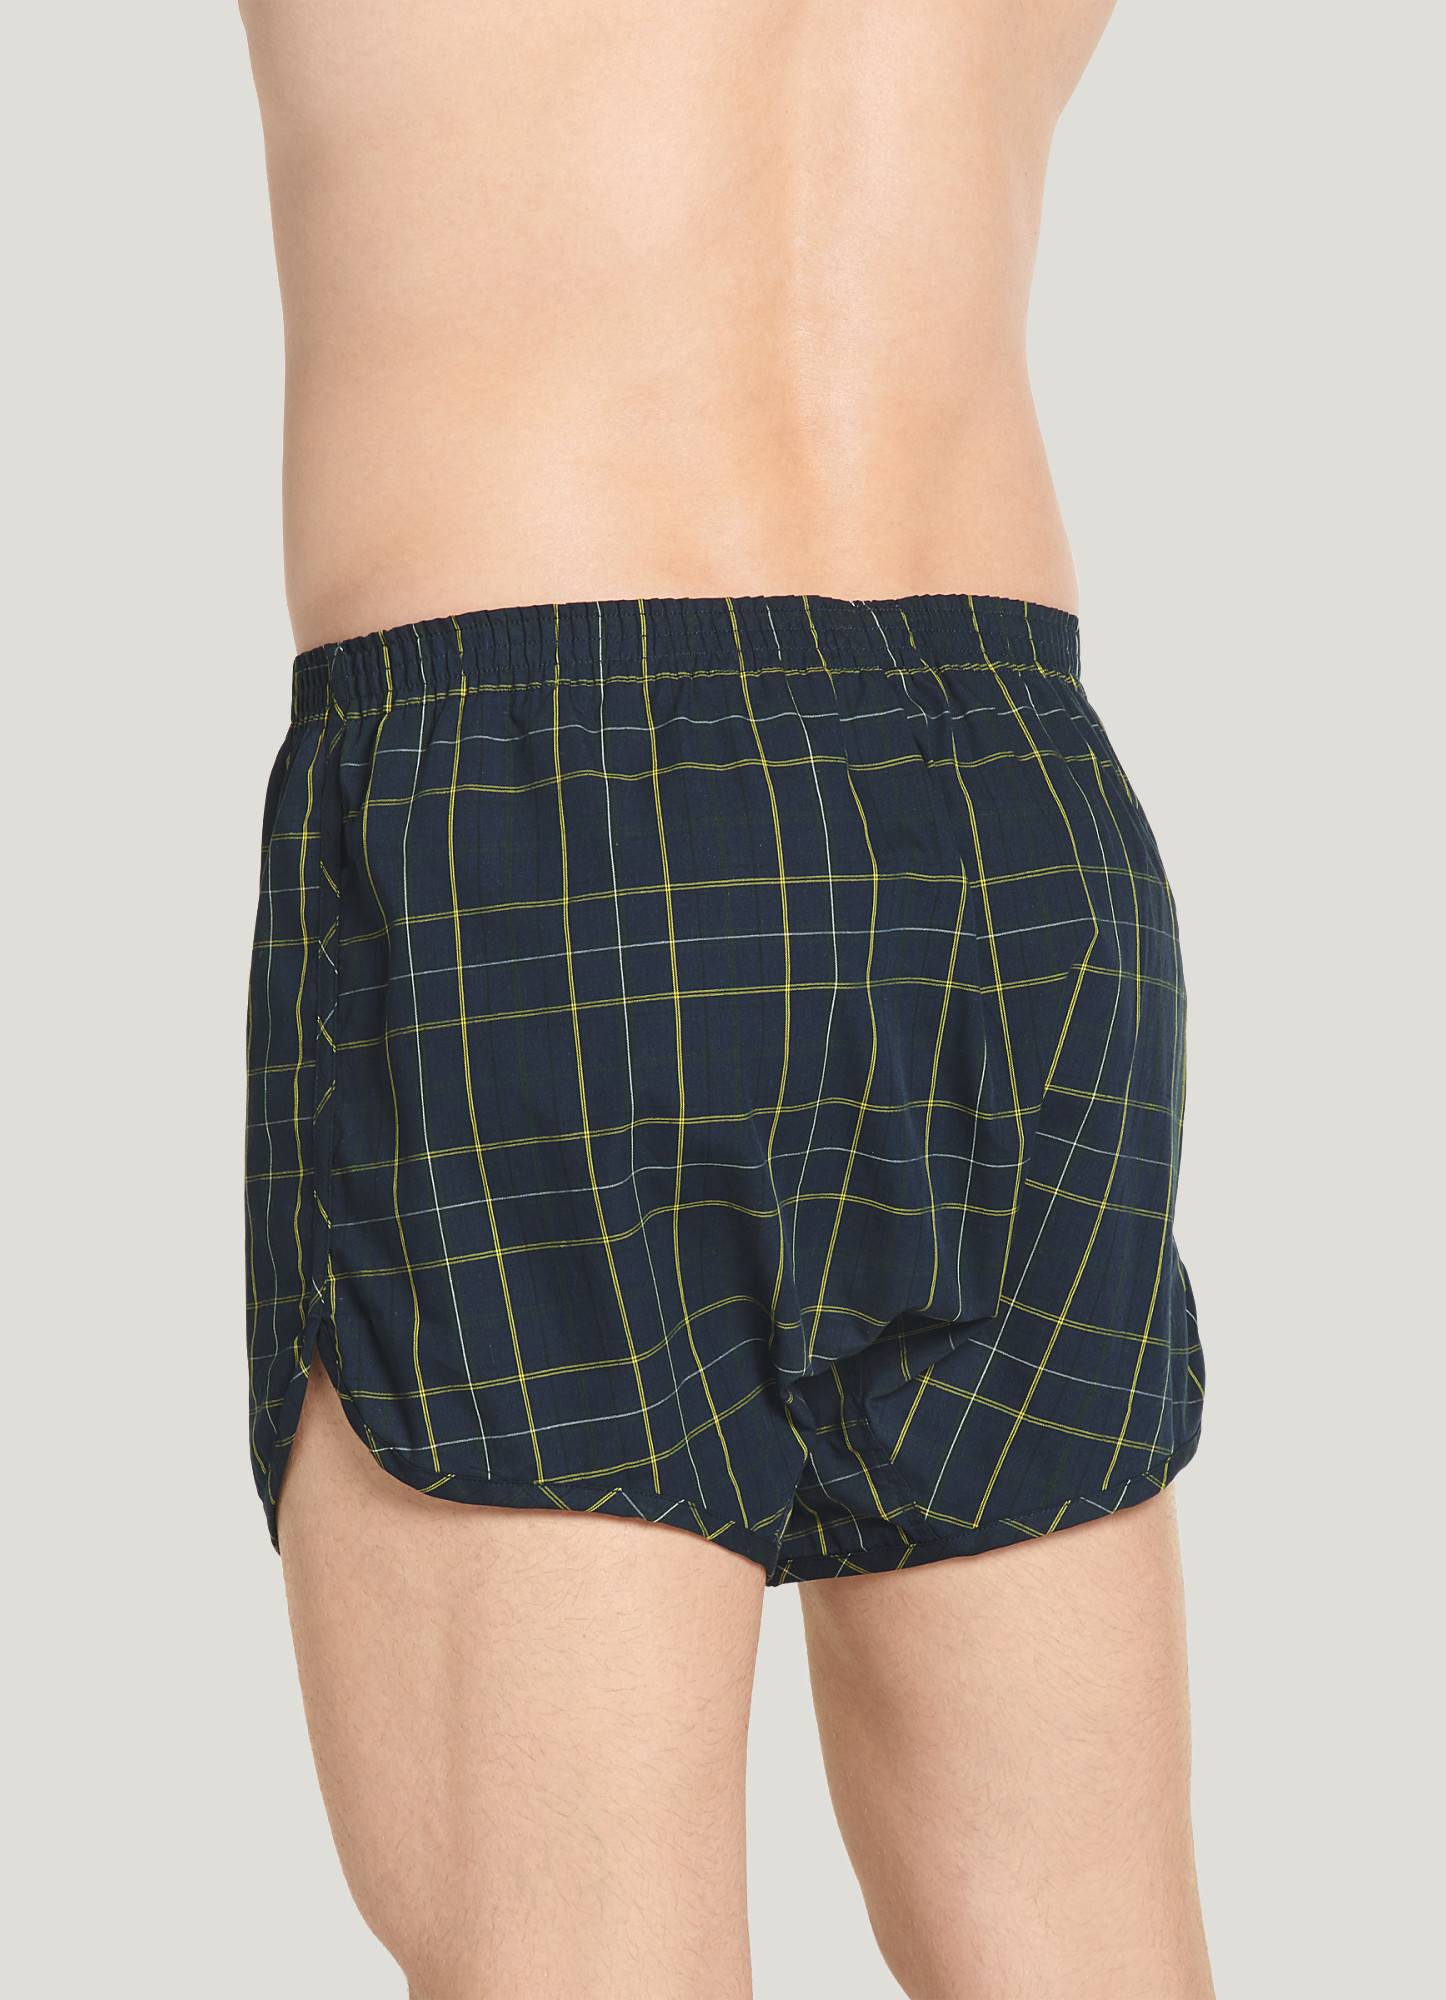 Jockey Underwear 4 Pack Boxer Briefs Mens Size S L56616